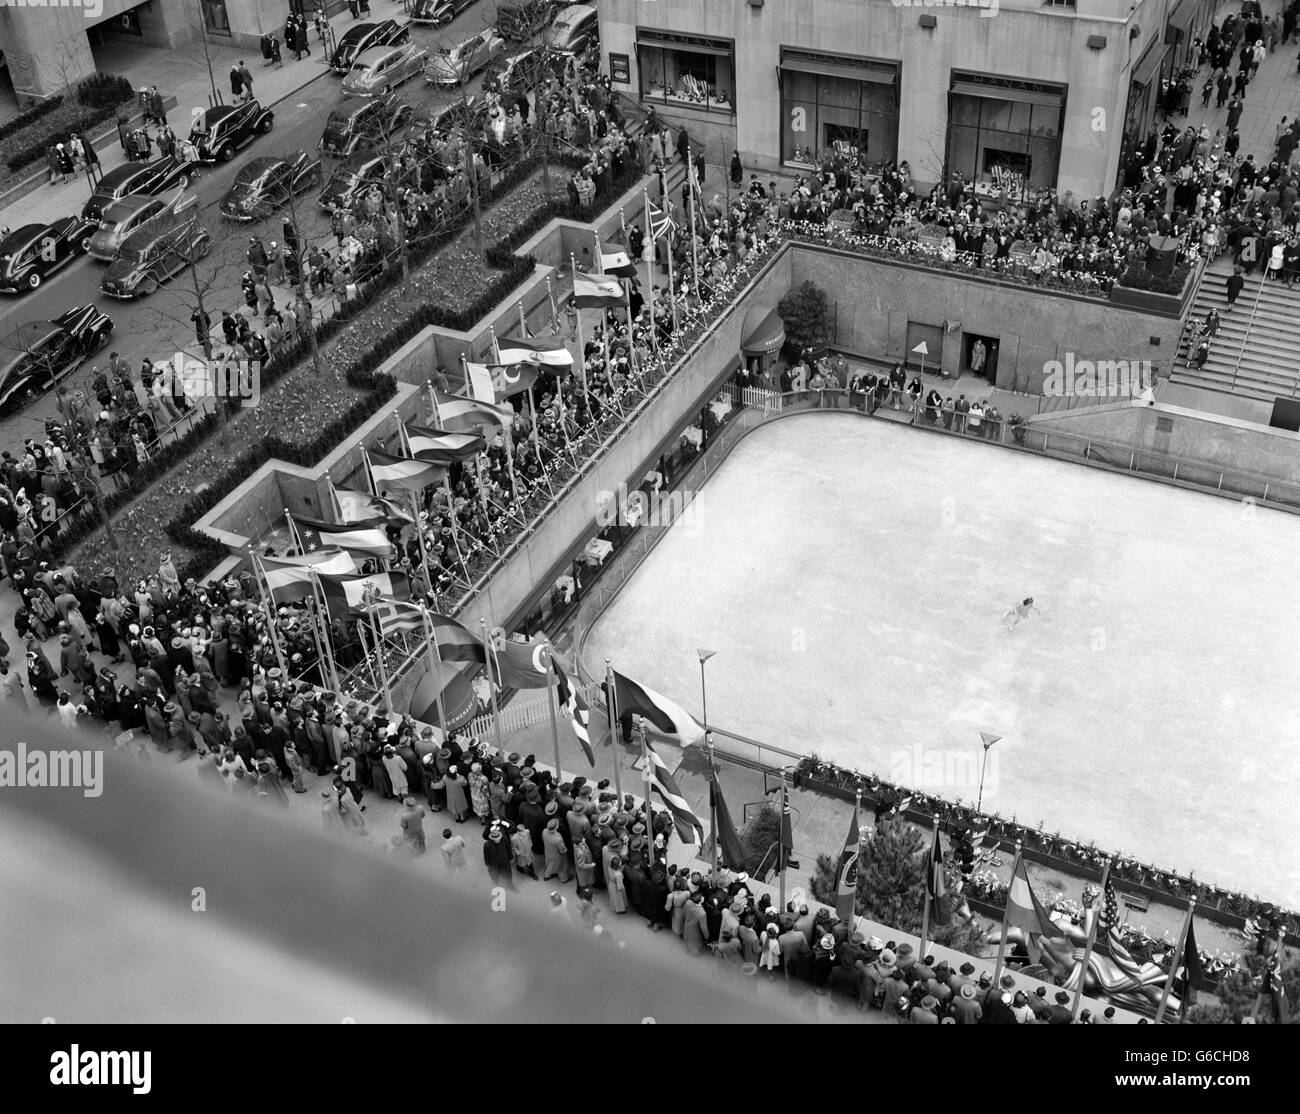 1940s CROWD WATCHING SKATER ROCKEFELLER CENTER ICE SKATING RINK MIDTOWN MANHATTAN NEW YORK CITY Stock Photo